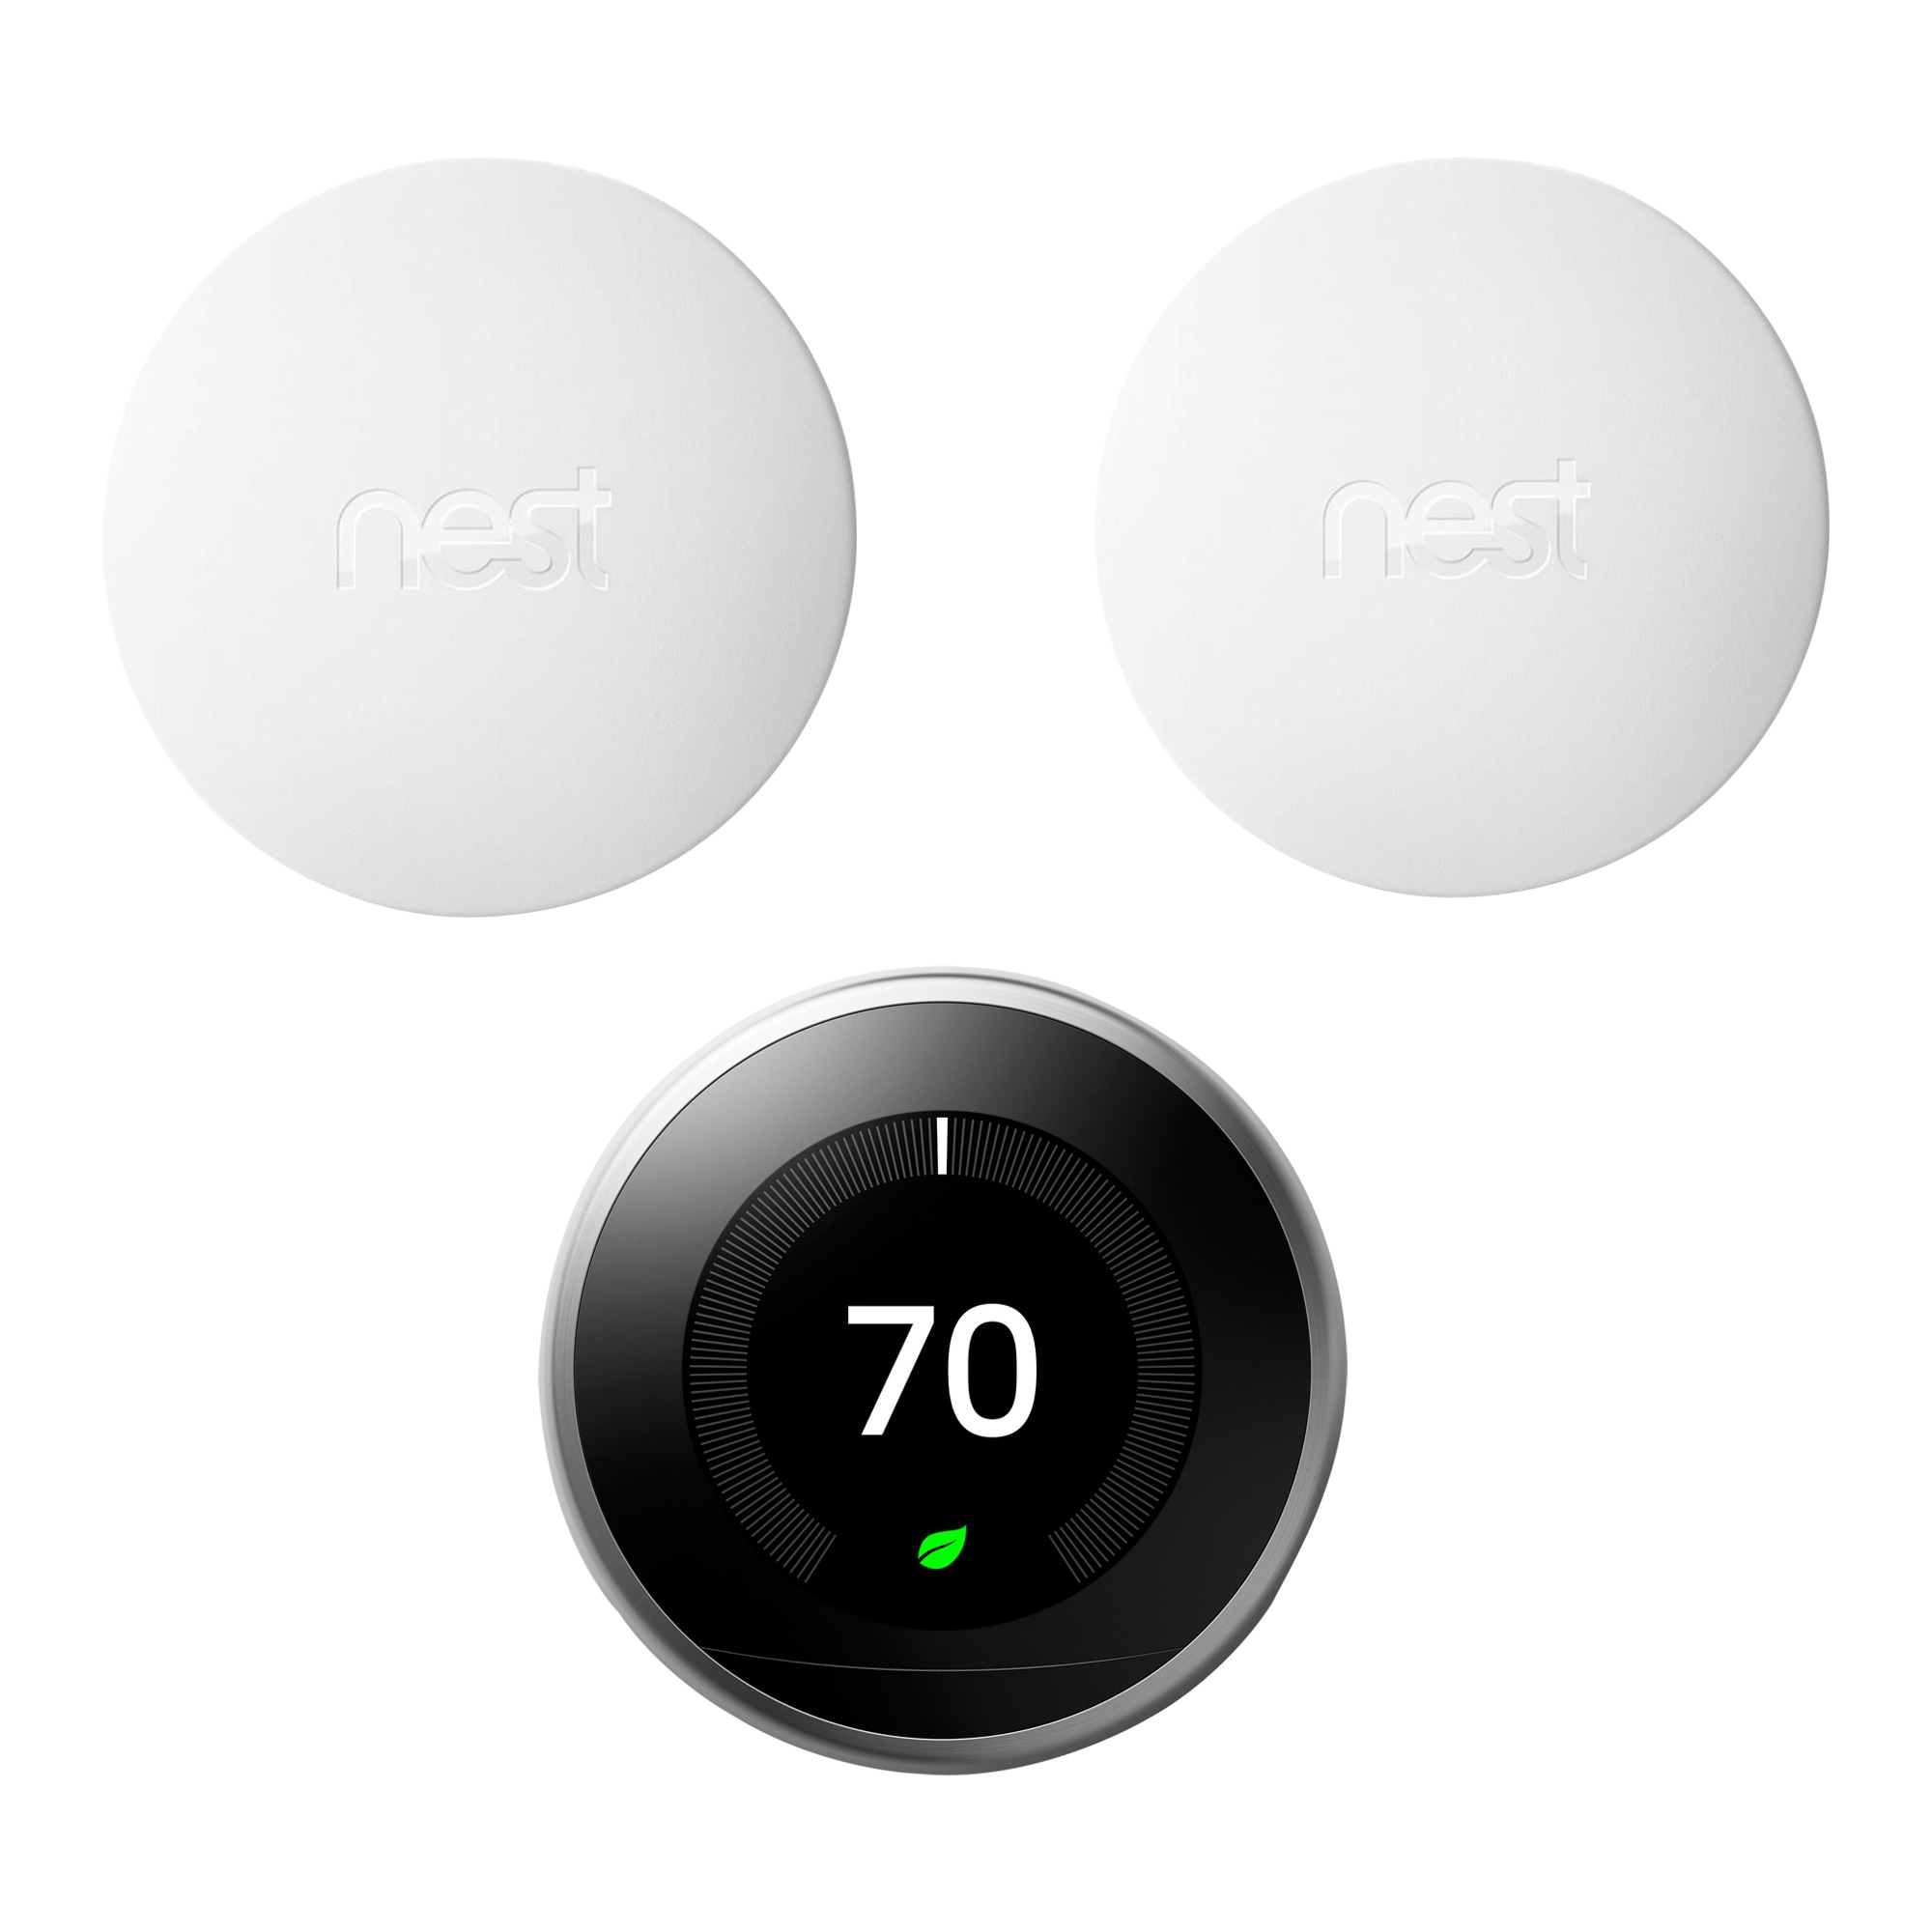 Google Nest Temperature Sensor - Smart Home Thermostat Sensor